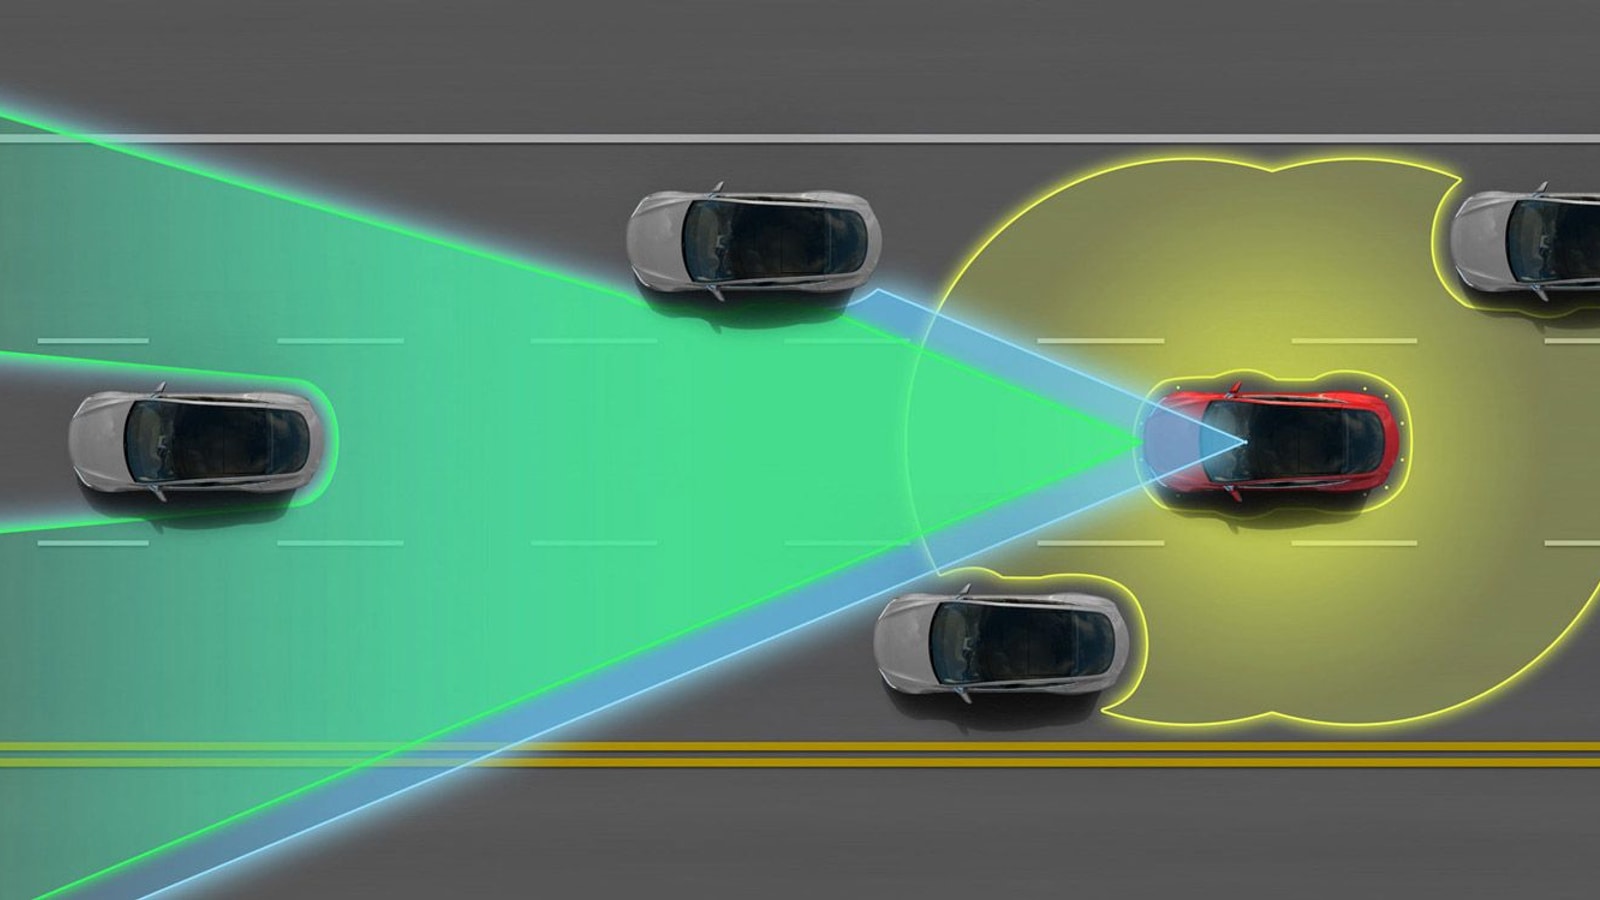 Tesla Model S Autopilot system